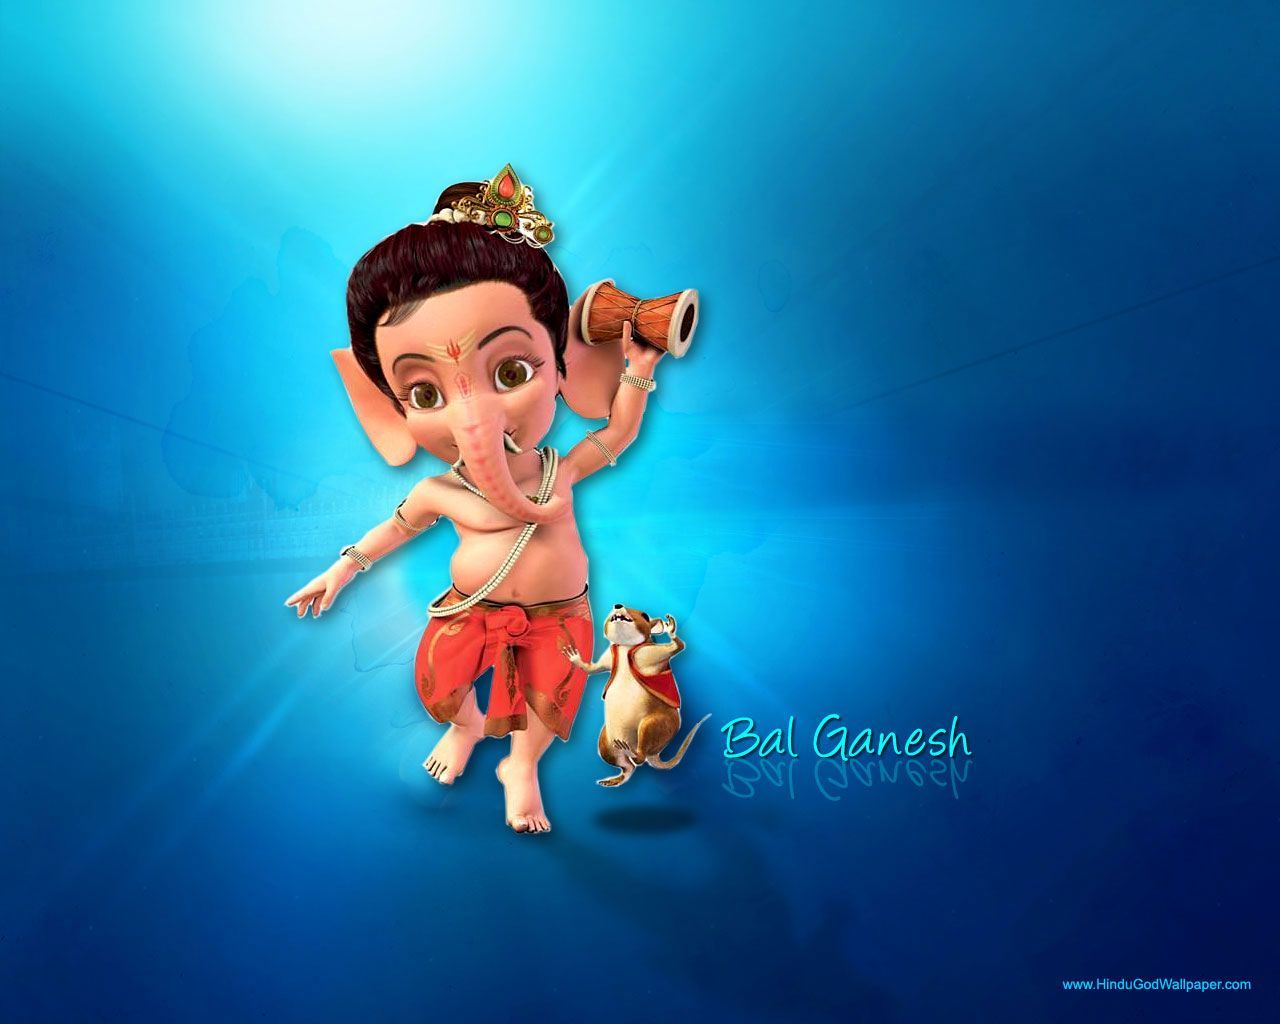 Bal Ganesha HD Wallpaper Download. Ganesh wallpaper, Happy